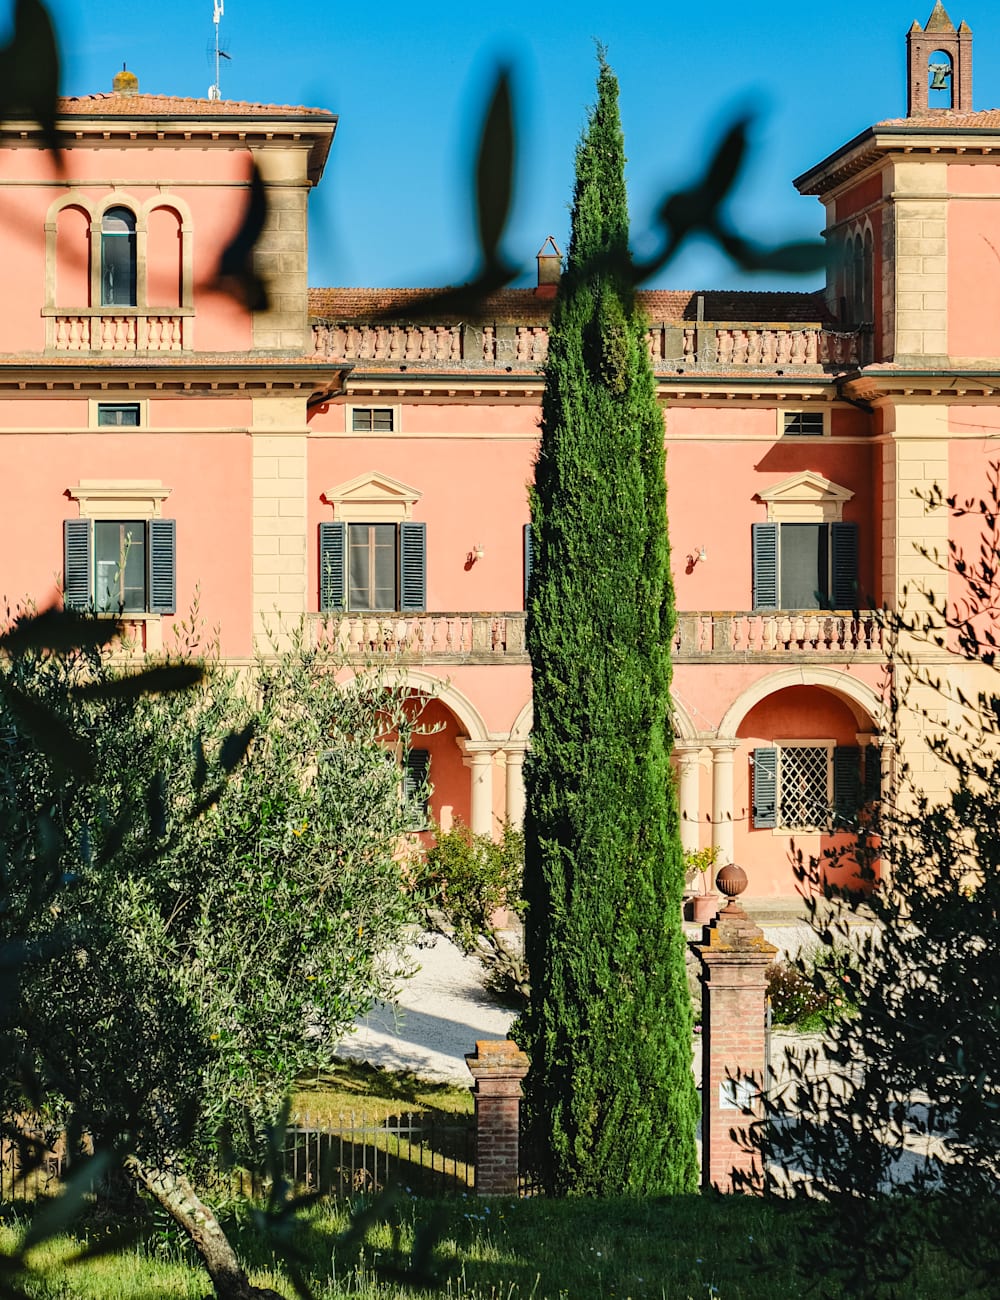 Villa Lena hotel, Tuscany, exterior with trees | by Michaela Watkinson for Mr & Mrs Smith